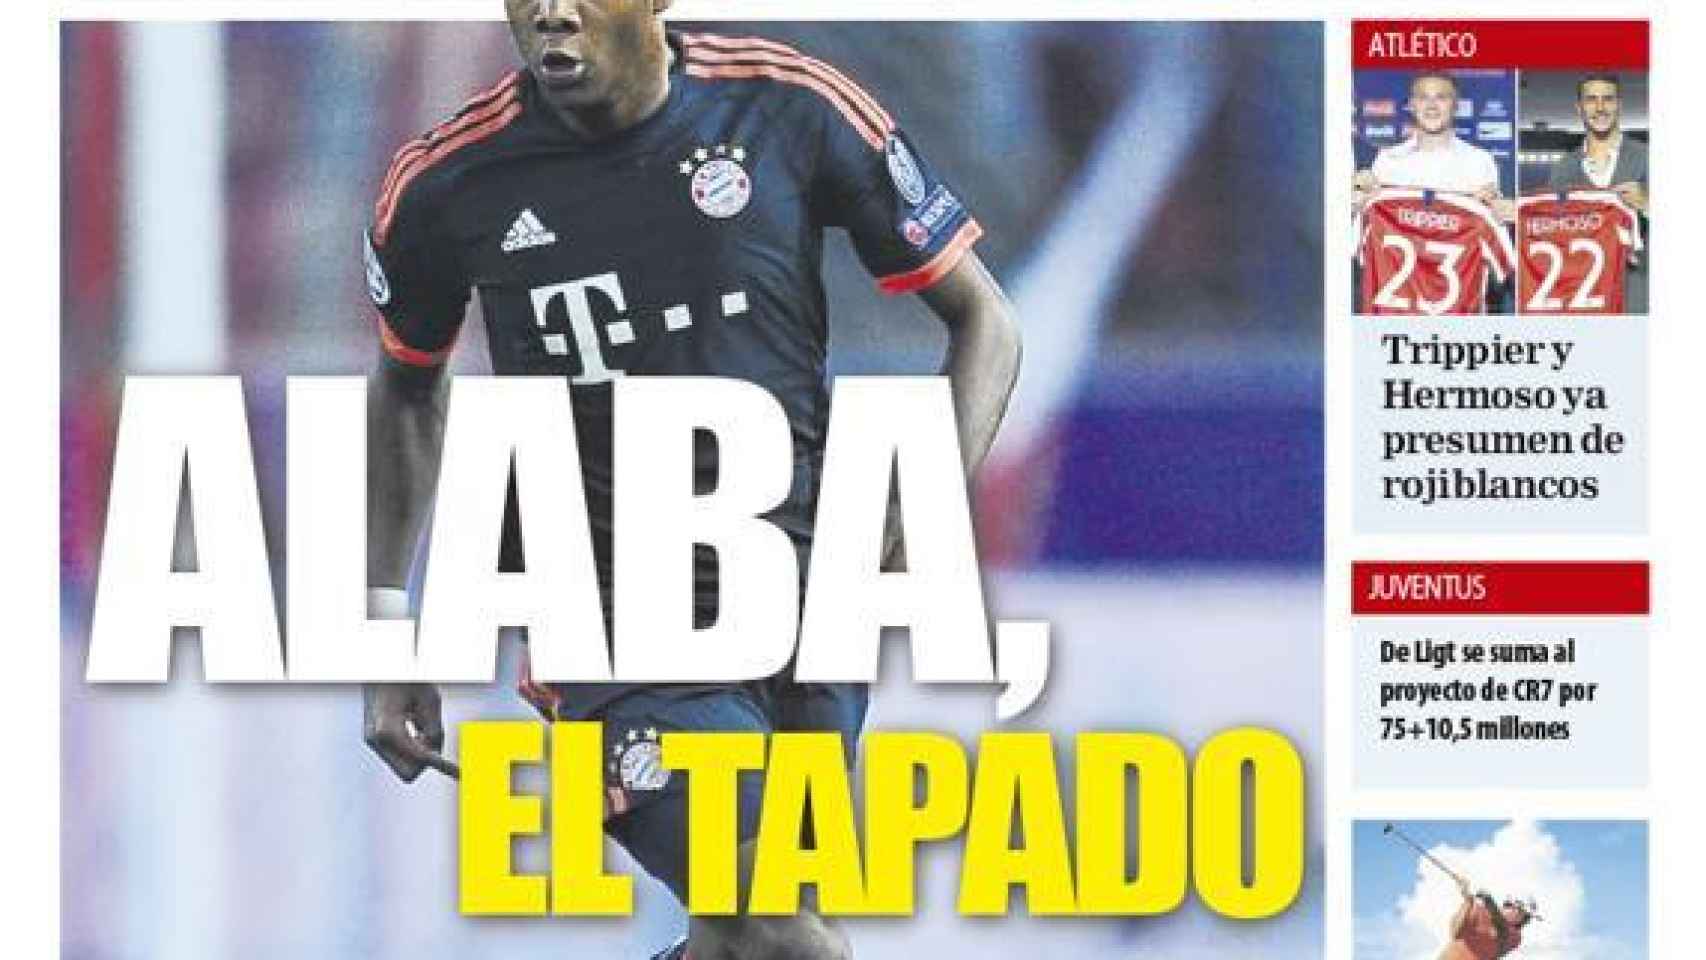 La portada del diario Mundo Deportivo (19/07/2019)1706 x 960